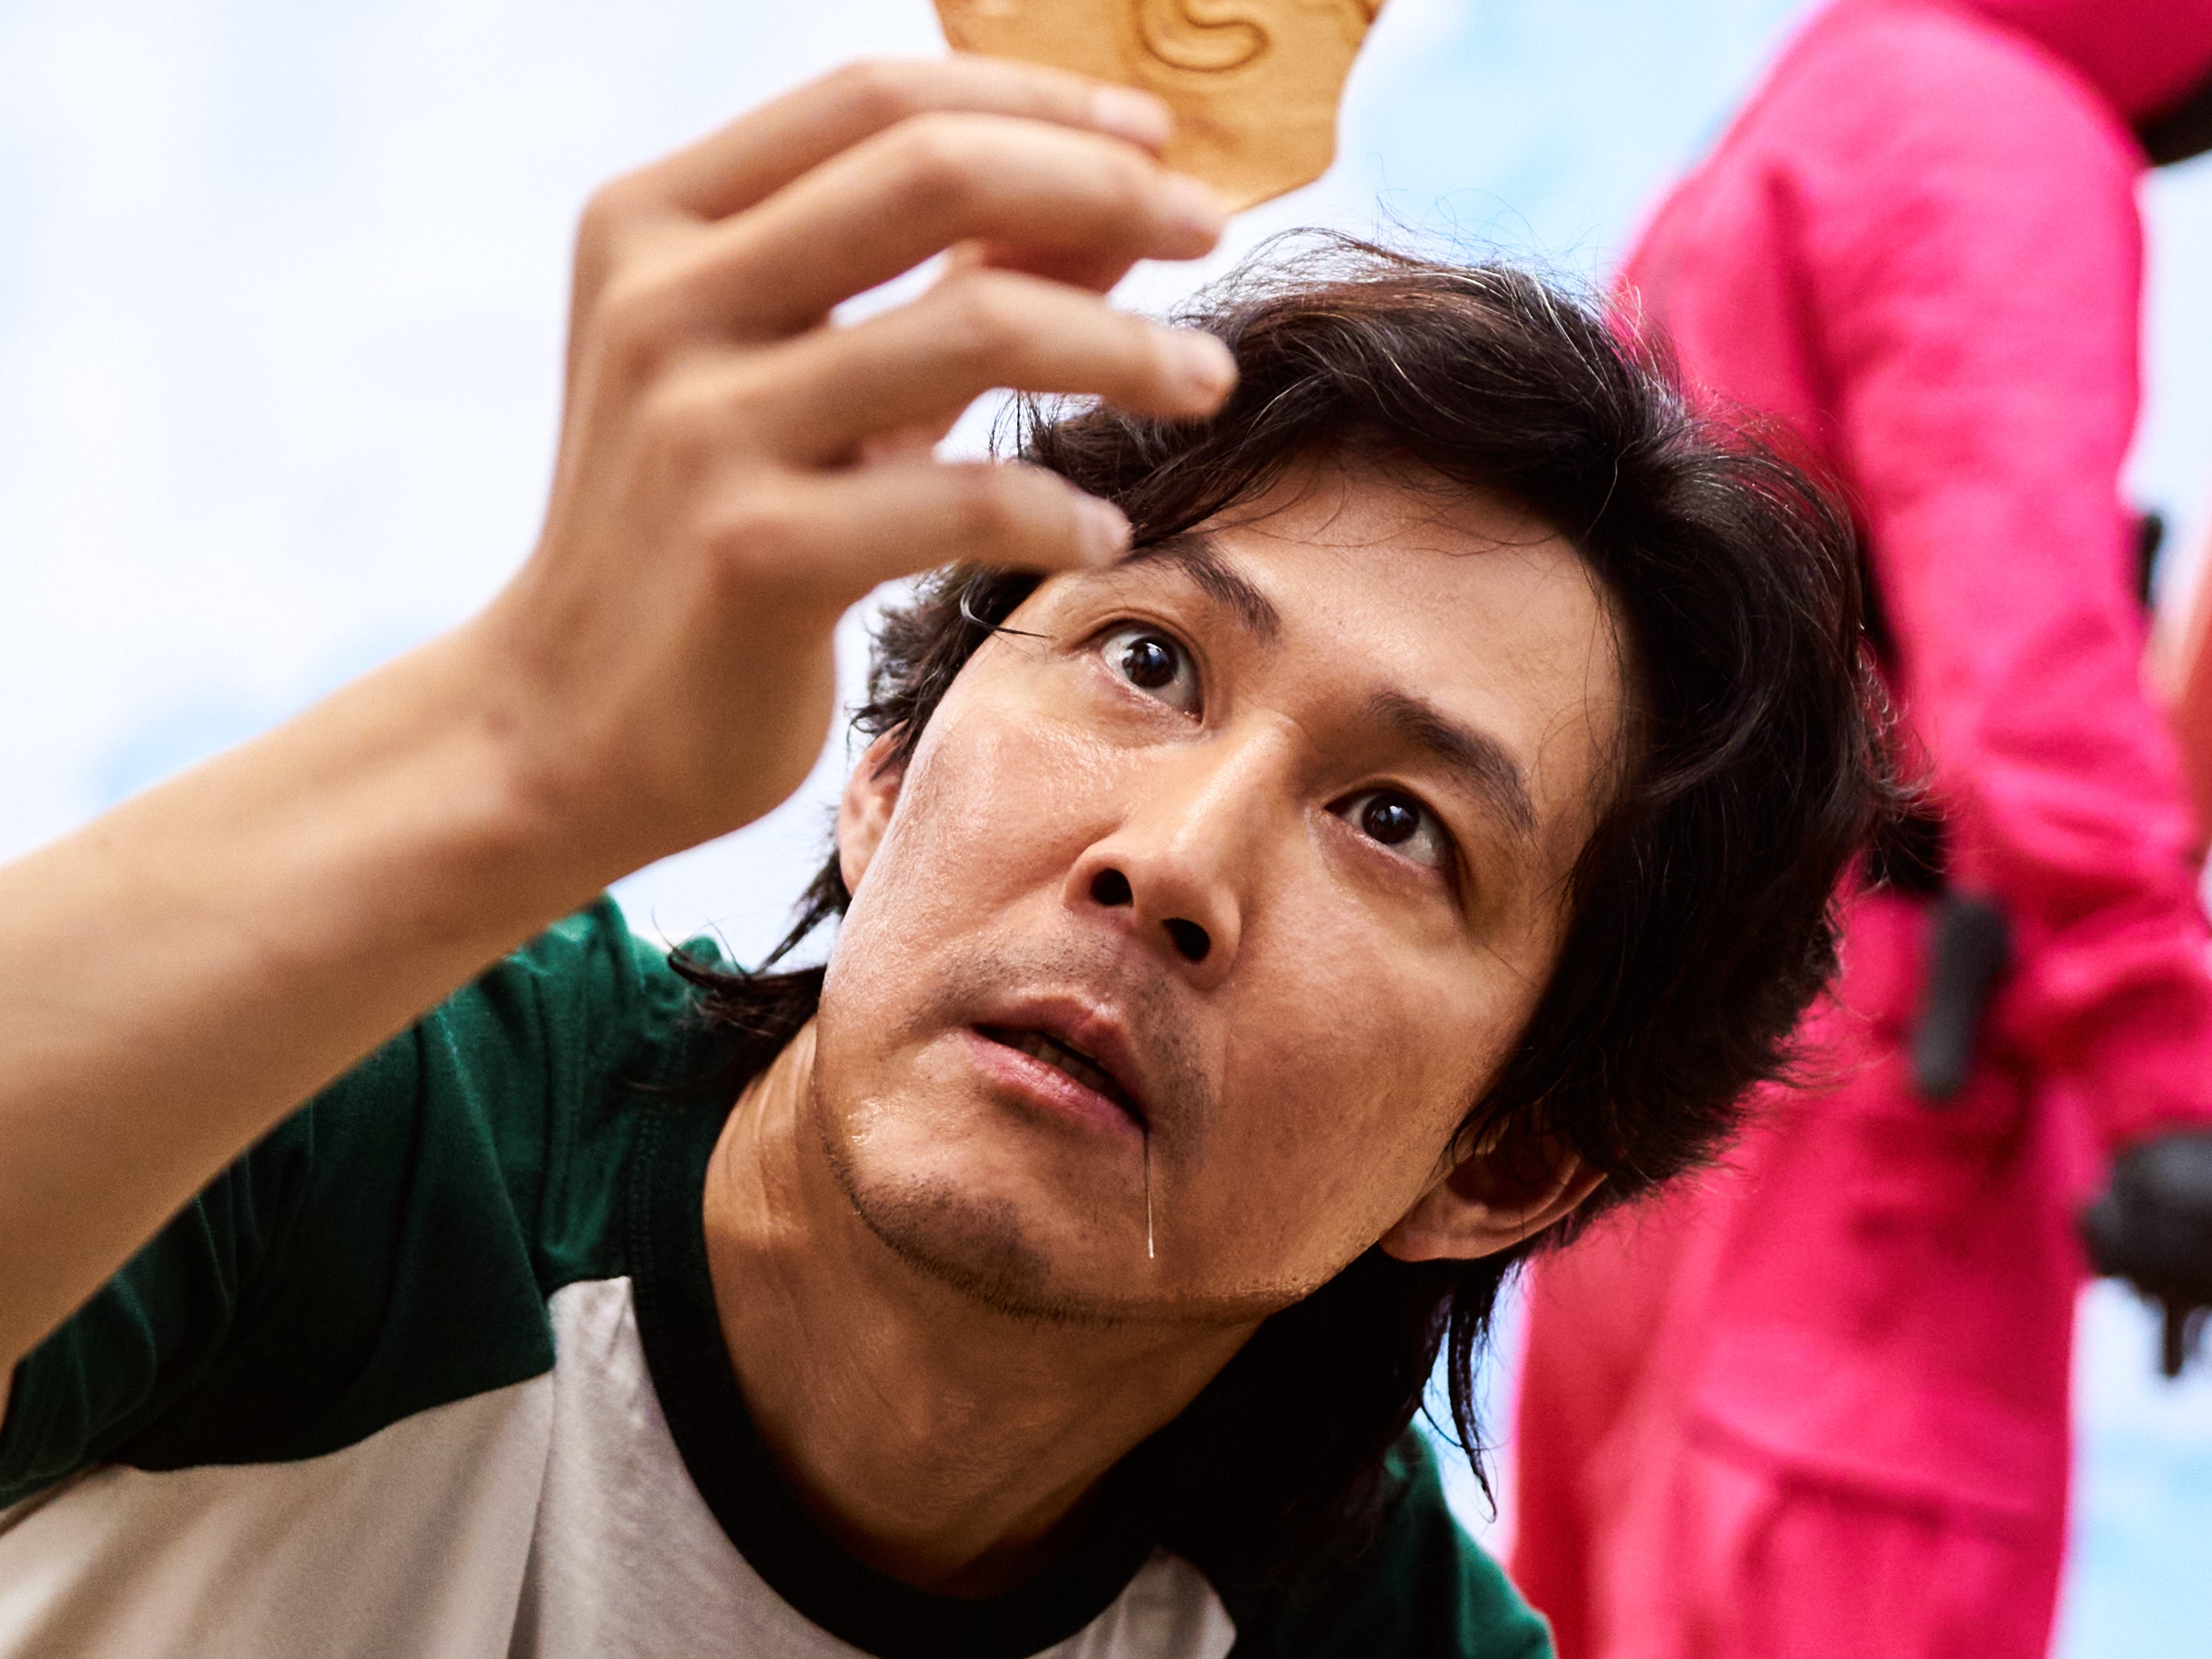 Let the game begin: Lee Jung-jae as Seong Gi-hun in Netflix’s ‘Squid Game'